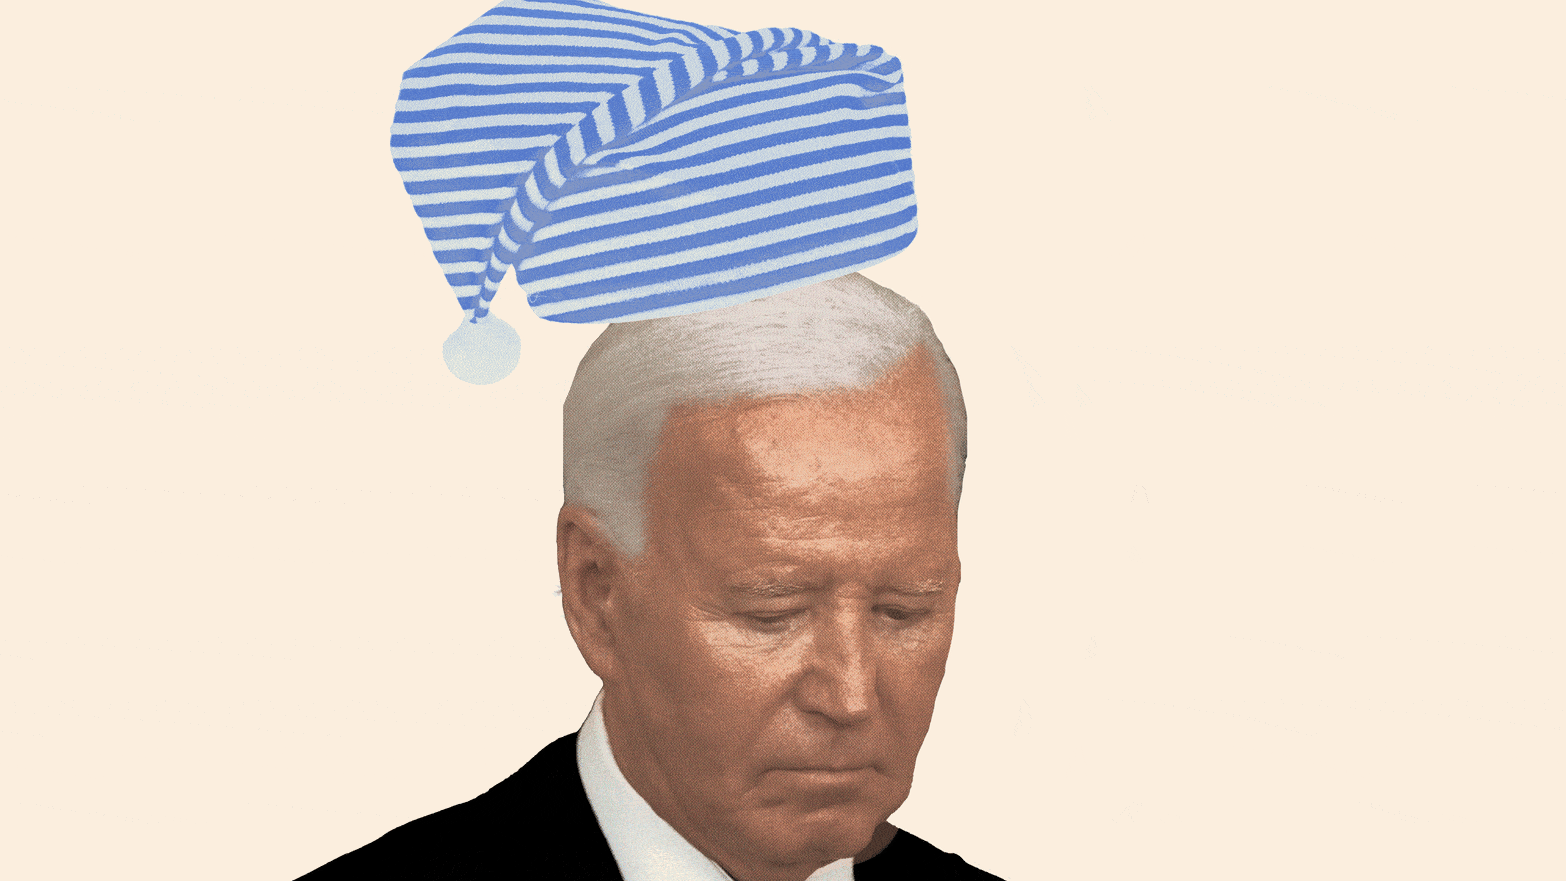 A horizontally striped blue nightcap descending on Joe Biden